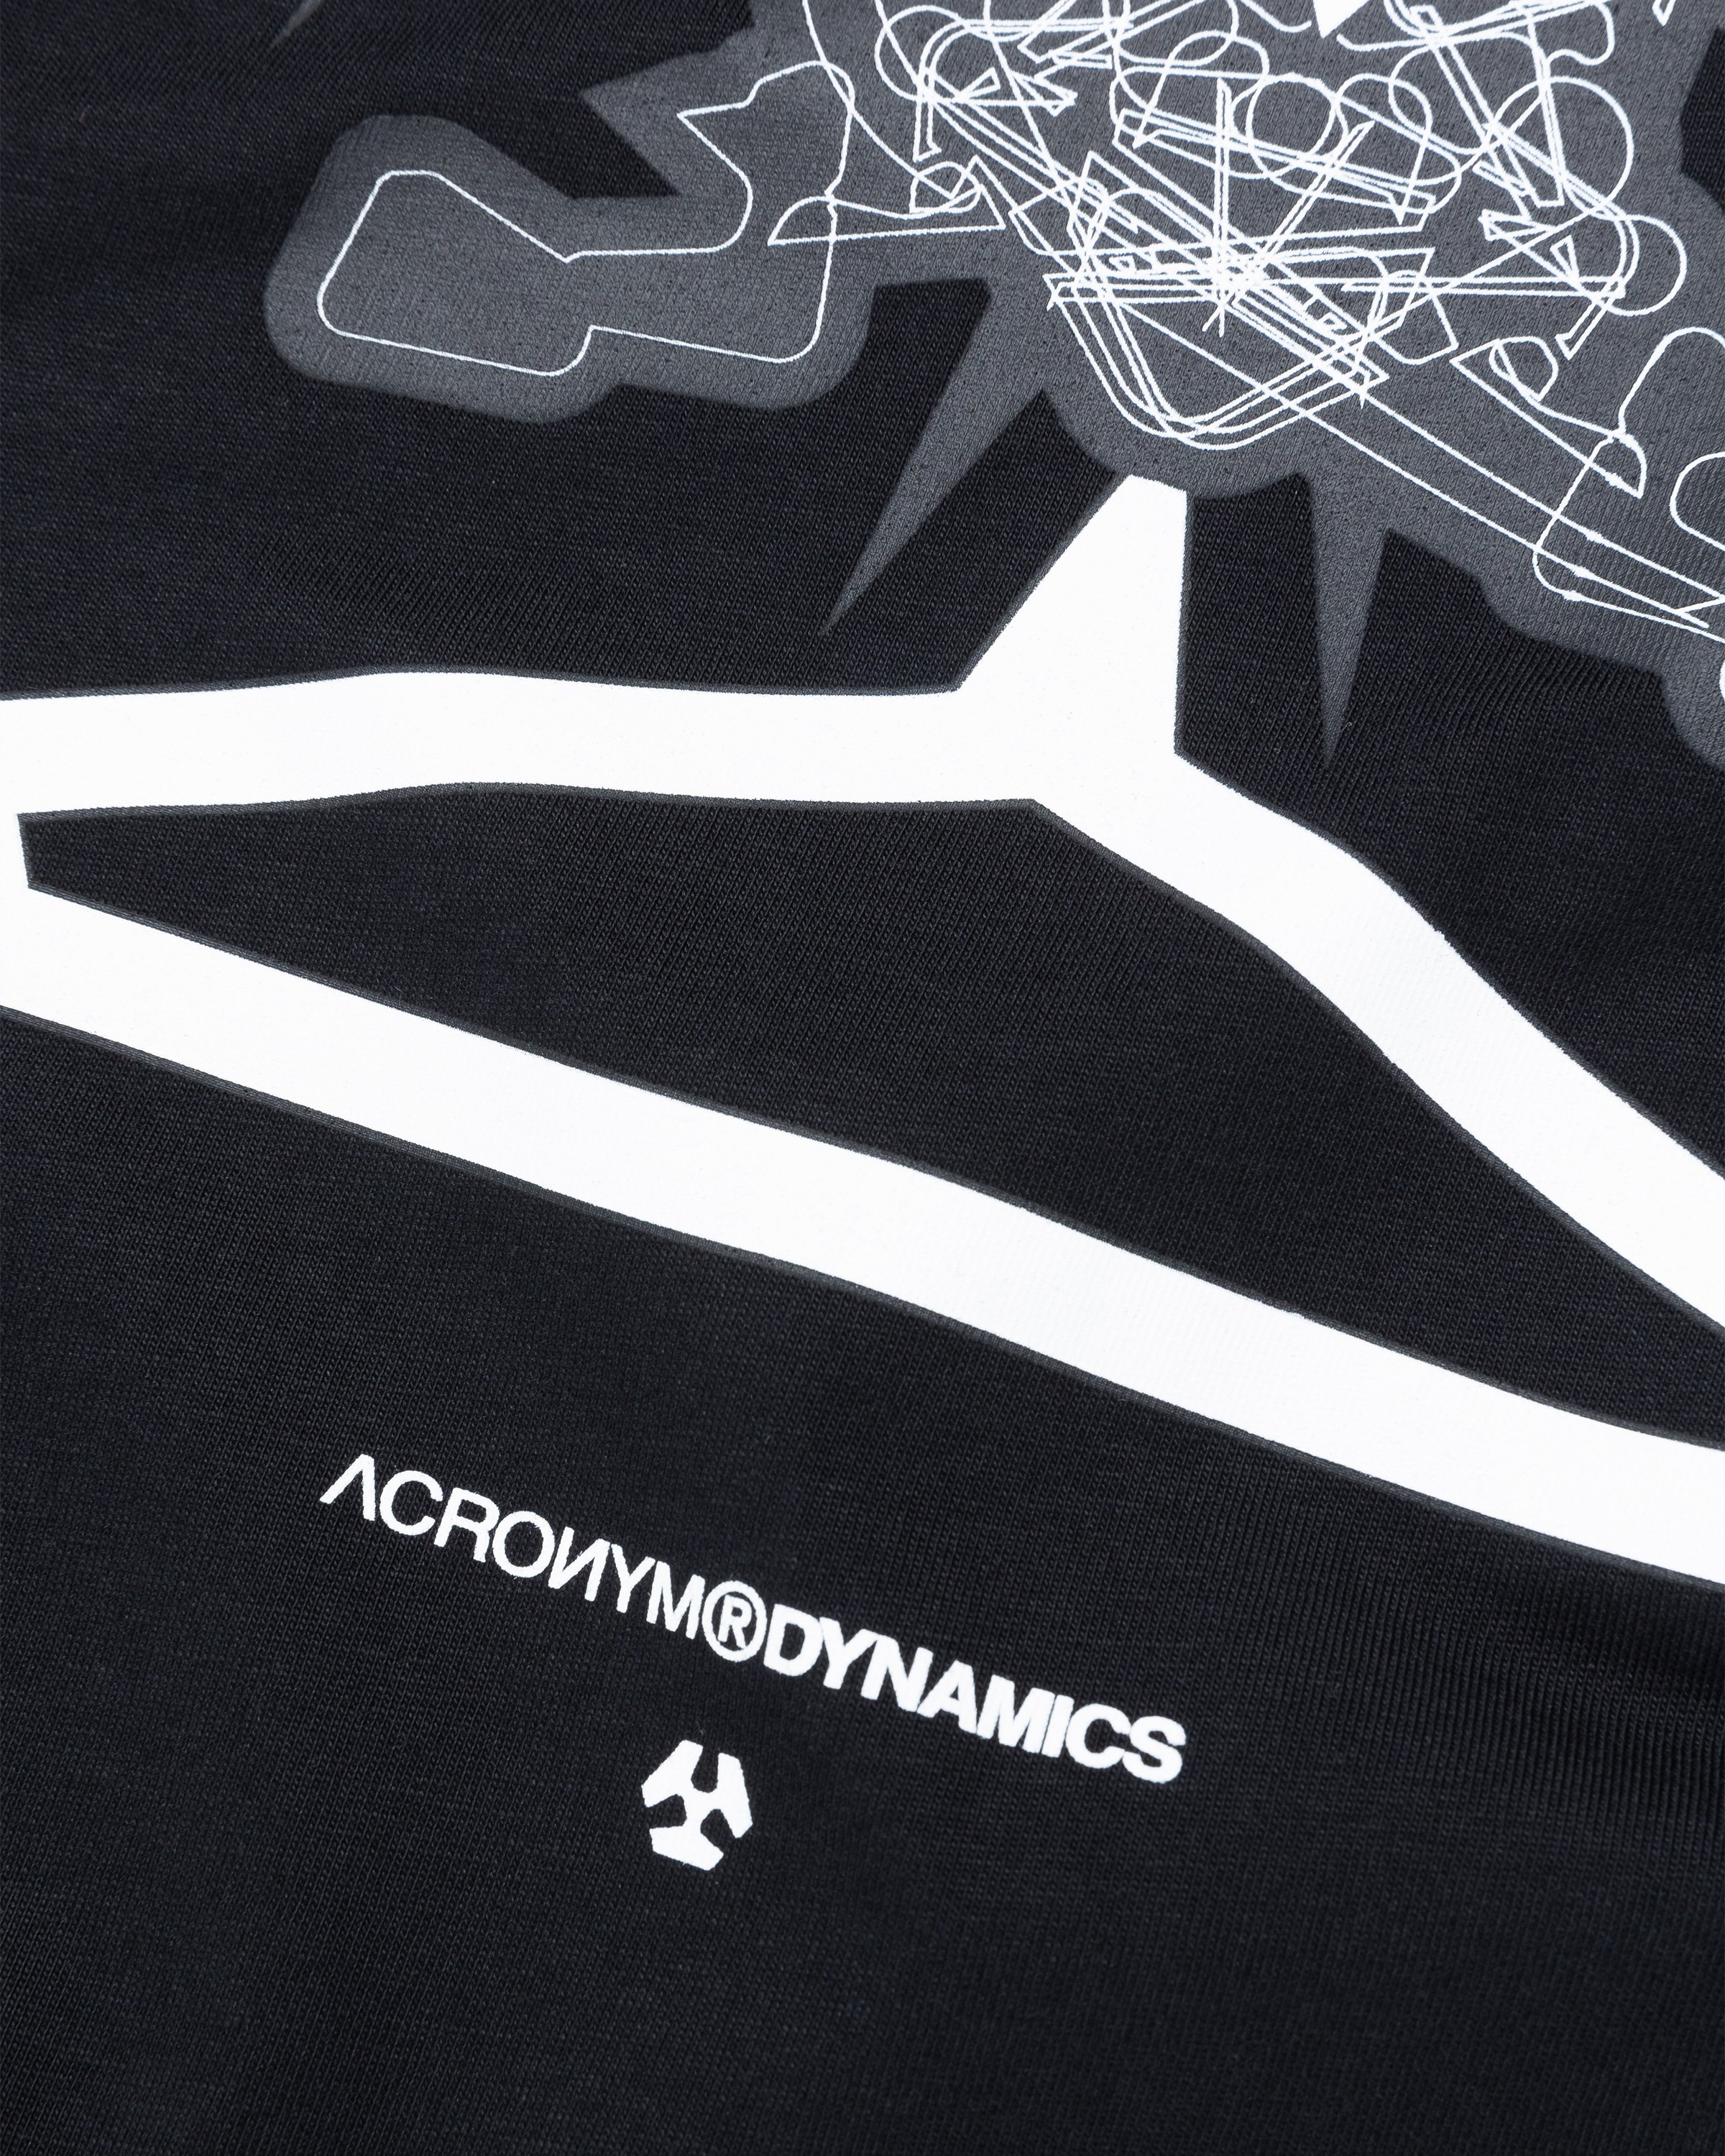 ACRONYM - S29-PR-B Organic Cotton Longsleeve T-Shirt Black - Clothing - Black - Image 5